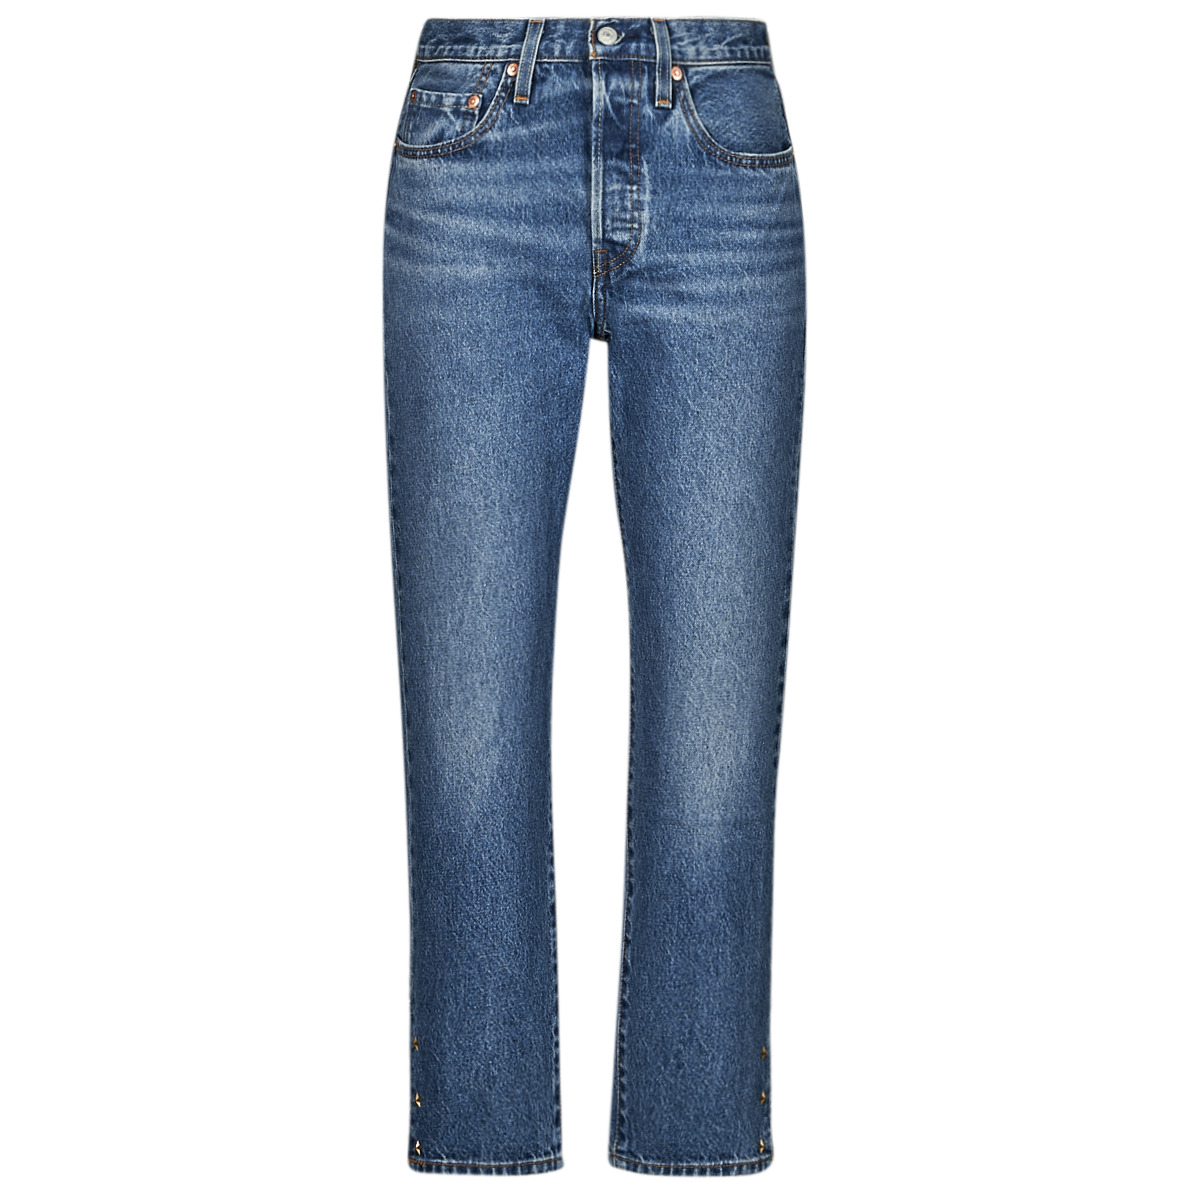 Clothing Women Boyfriend jeans Levi's 501® CROP Blue